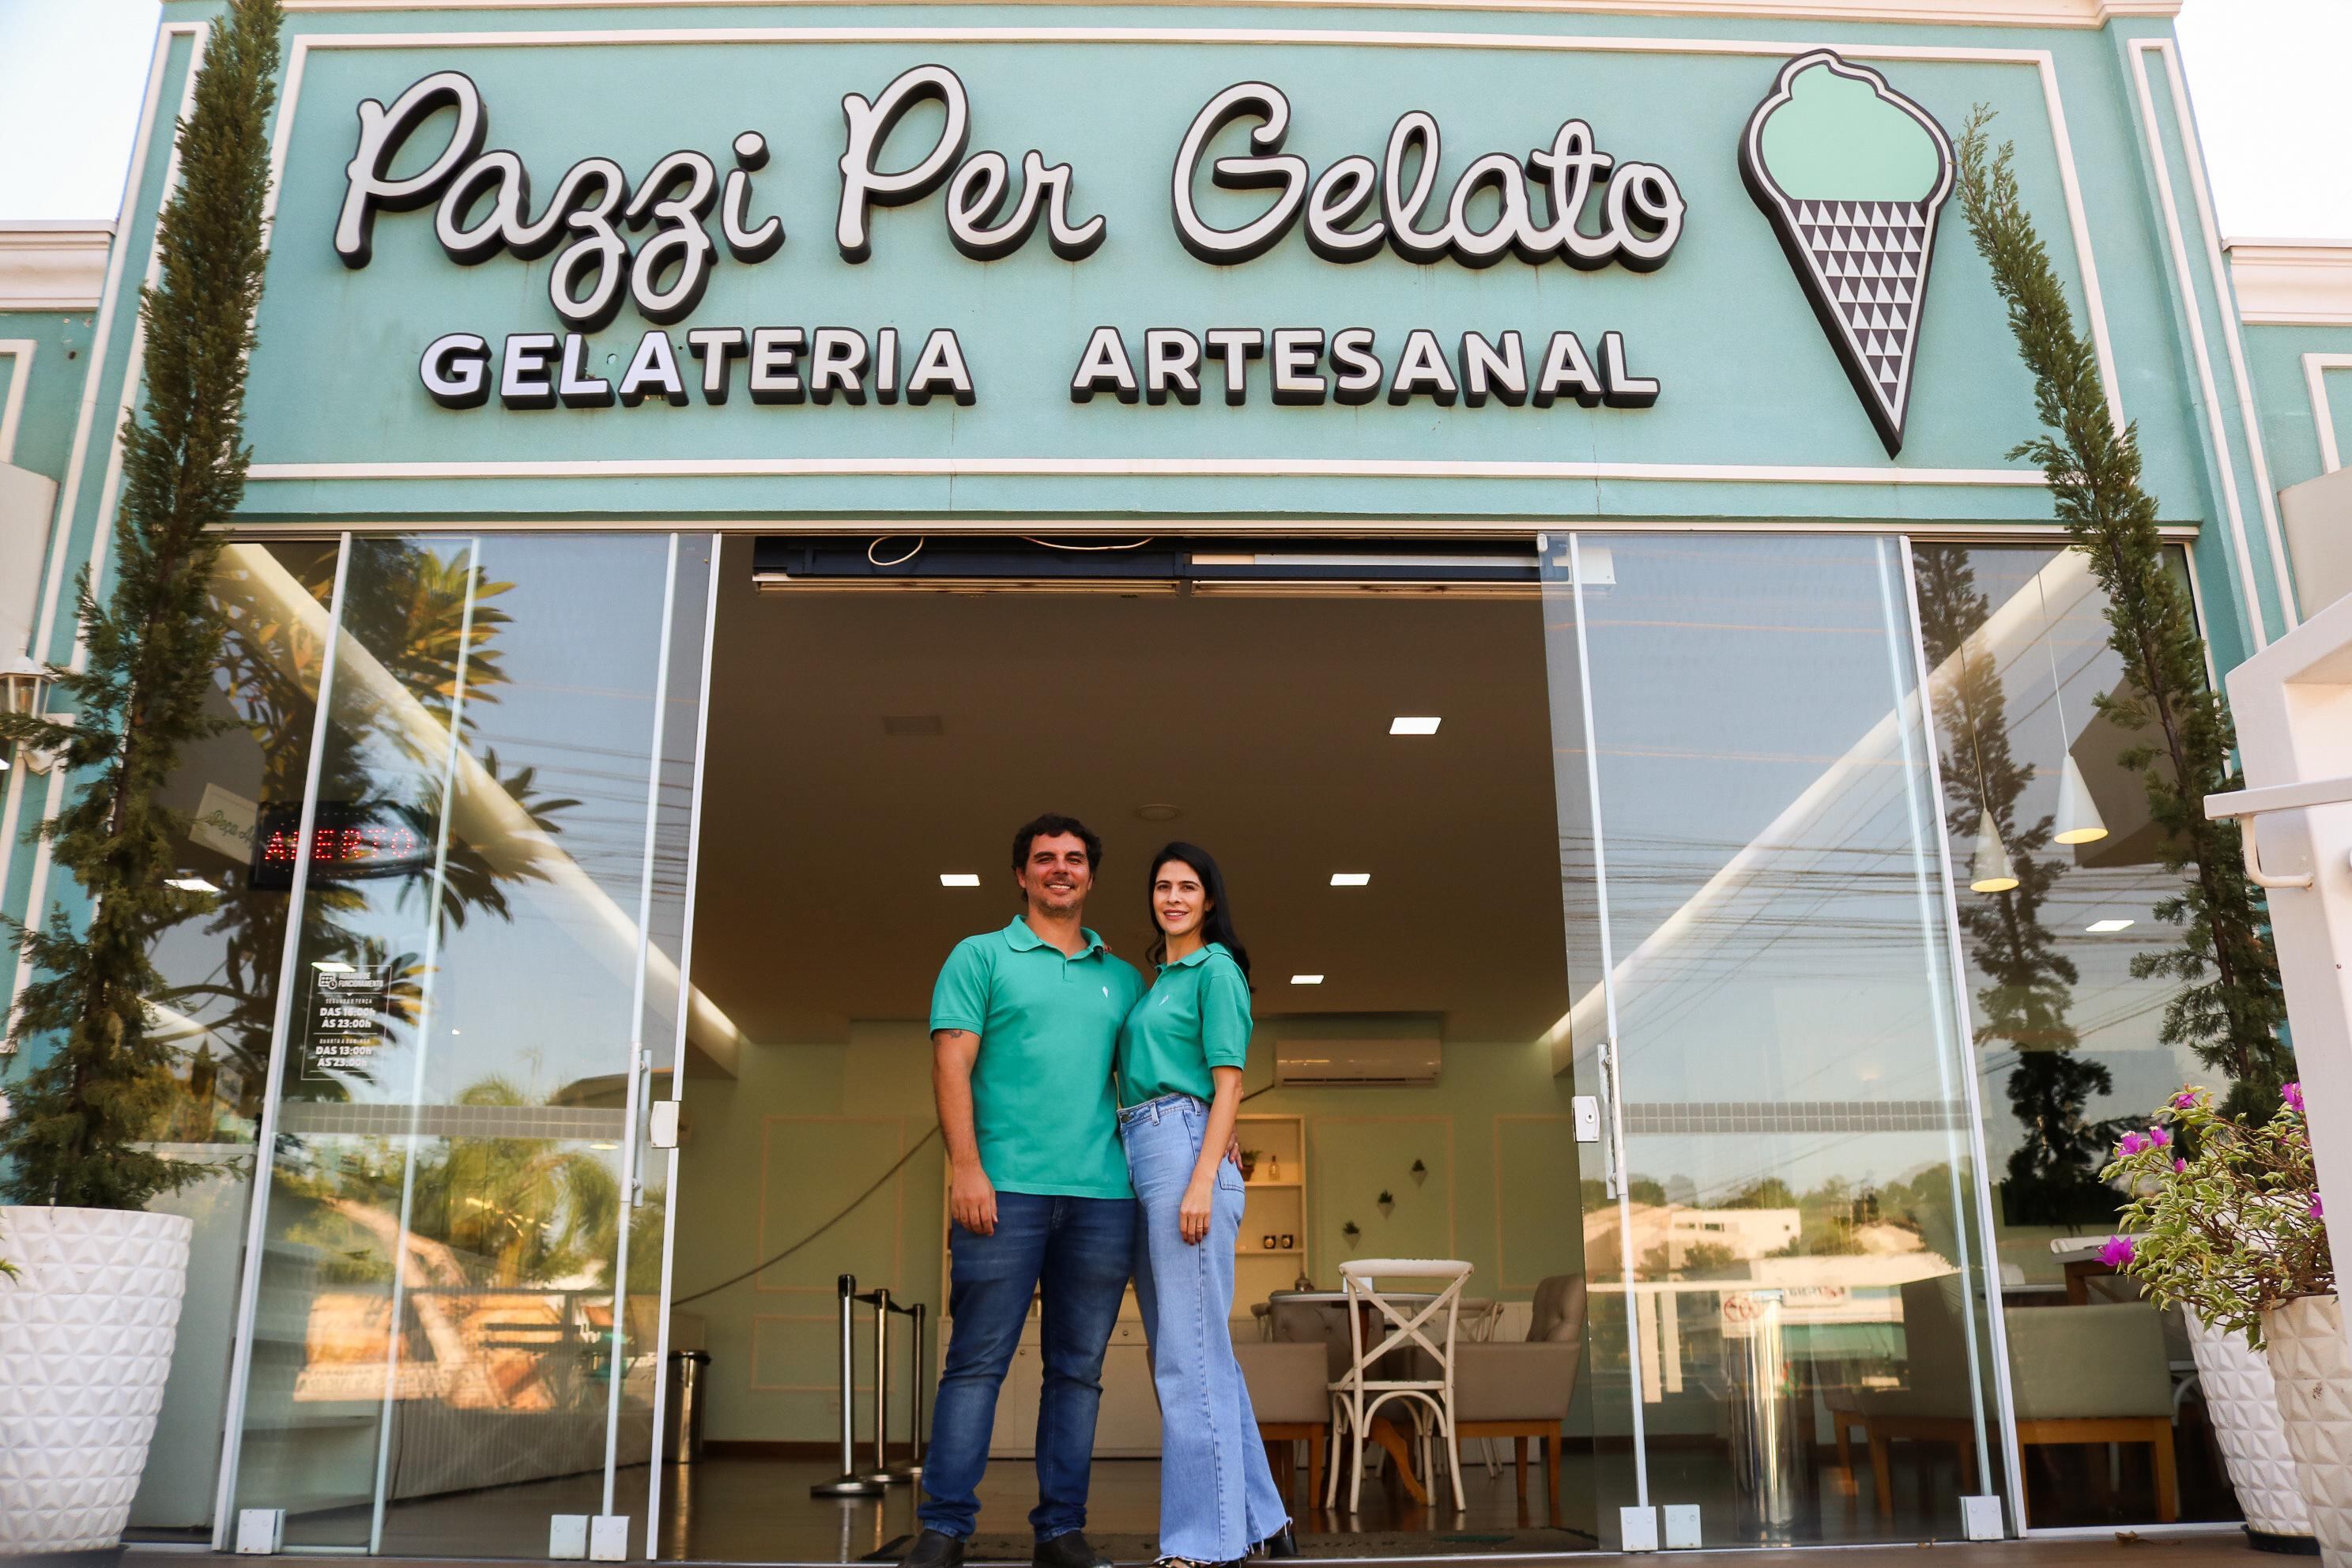 O engenheiro de software Vitor Teixeira e a bancária Cecília Lovato, que criaram a Pazzi Per Gelato.